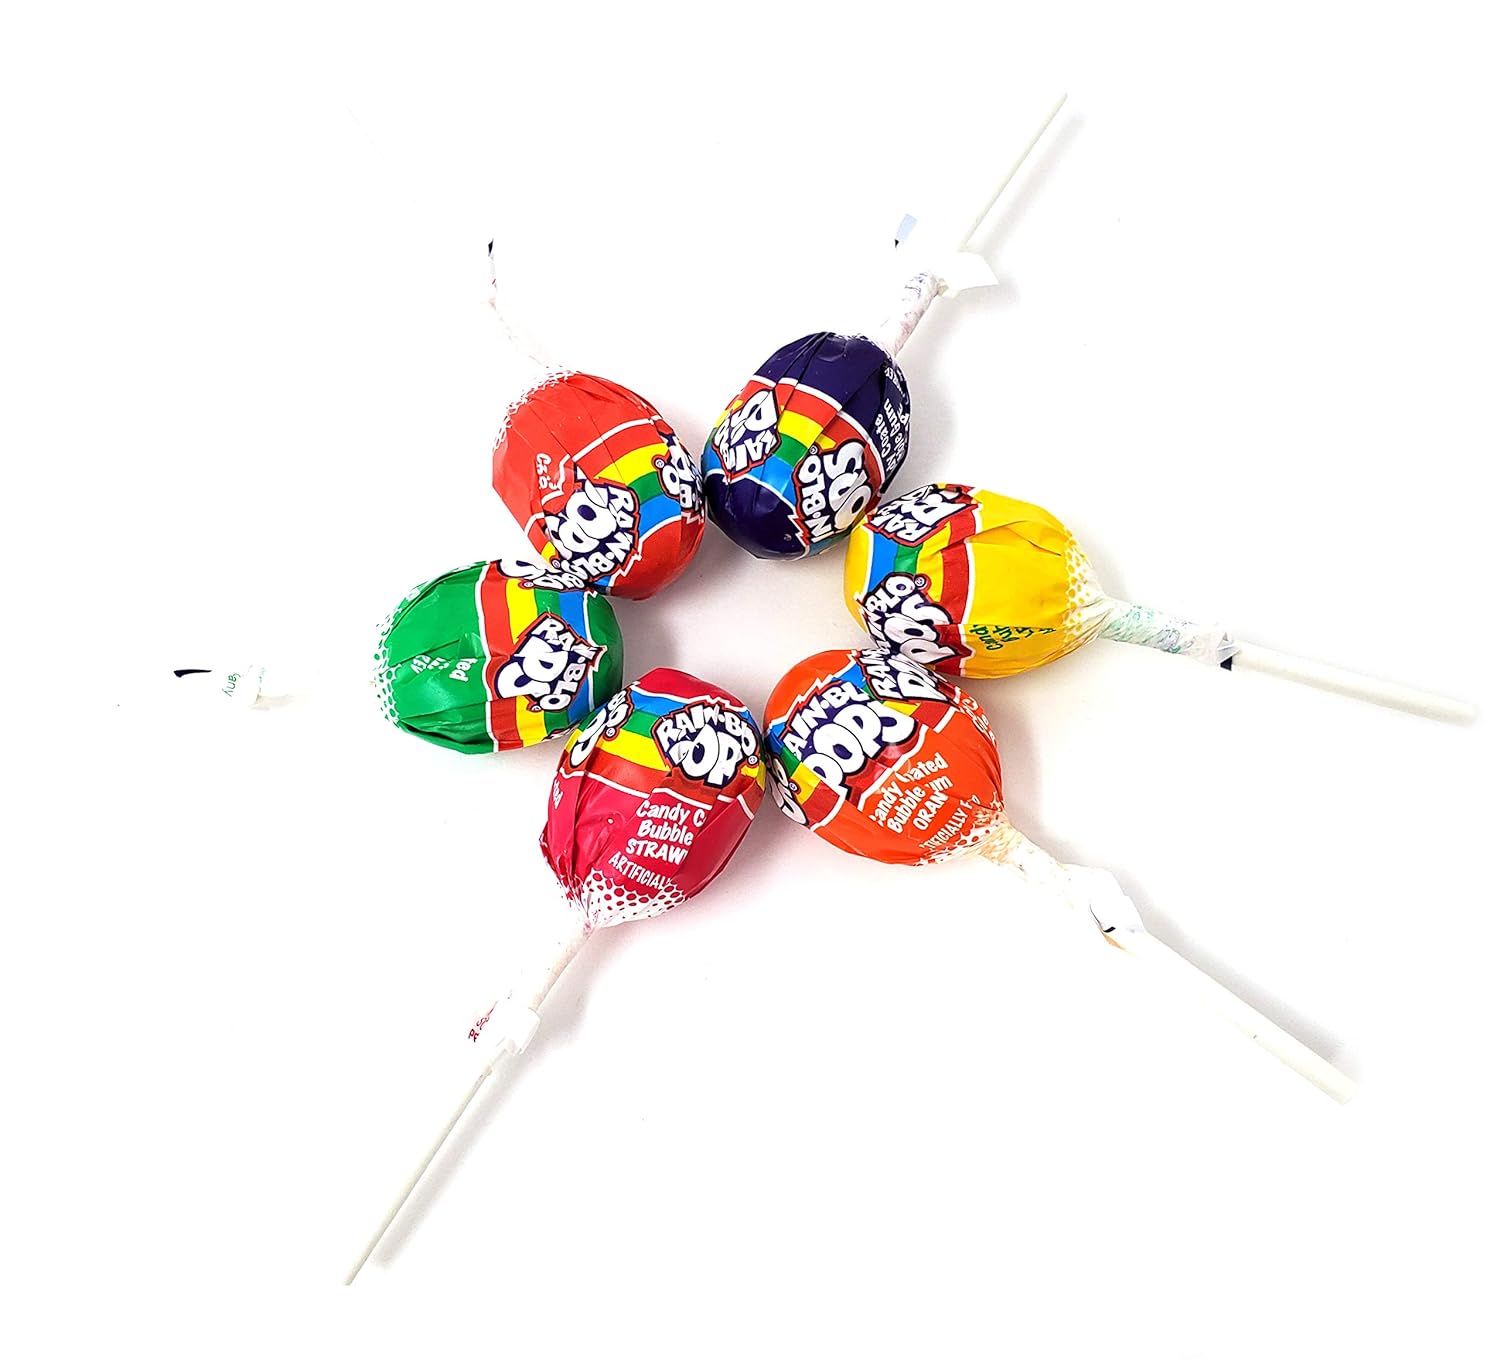  CRAZYOUTLET Easter Rainblo Lollipops Suckers Hard Candy, Assorted Fruit Flavors Mix, Bulk Pack 2 Lbs